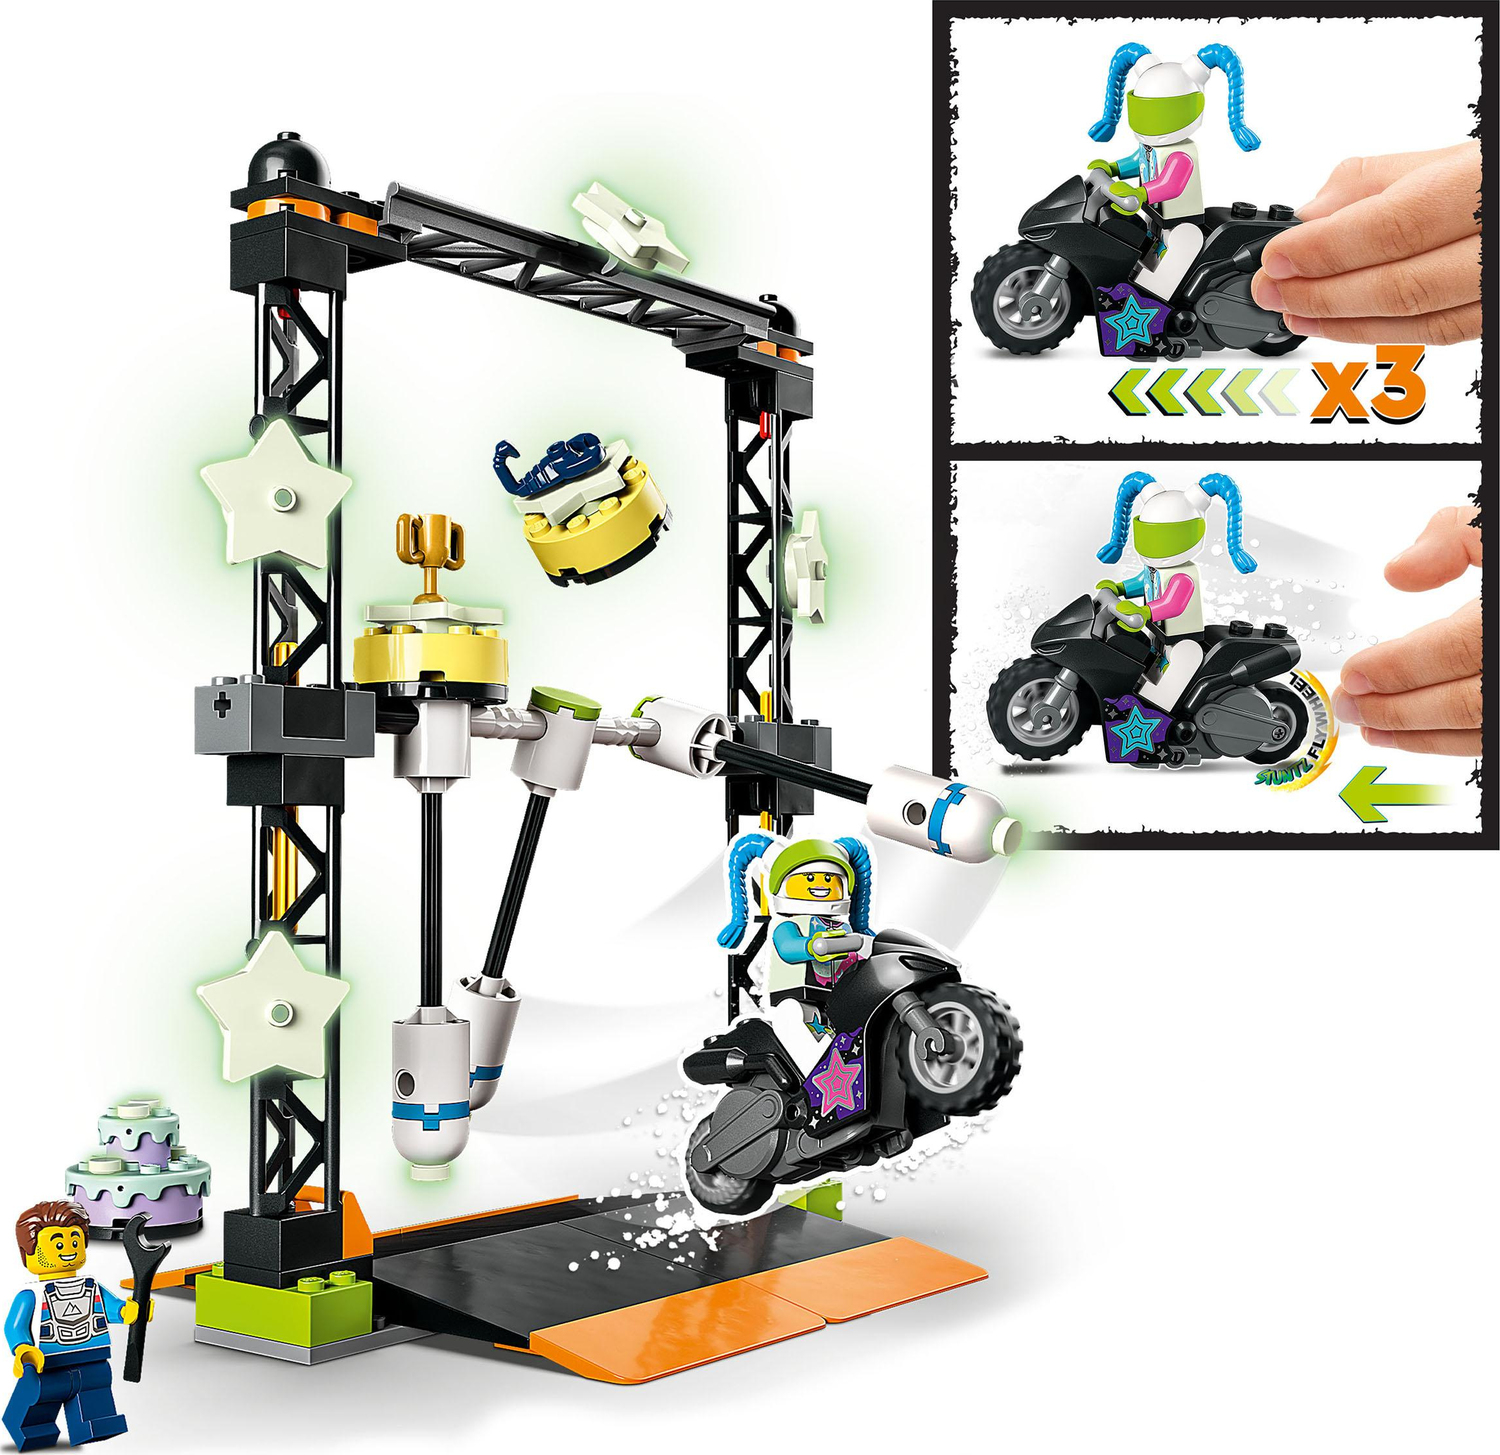 LEGO City Stuntz The Knockdown Challenge Set